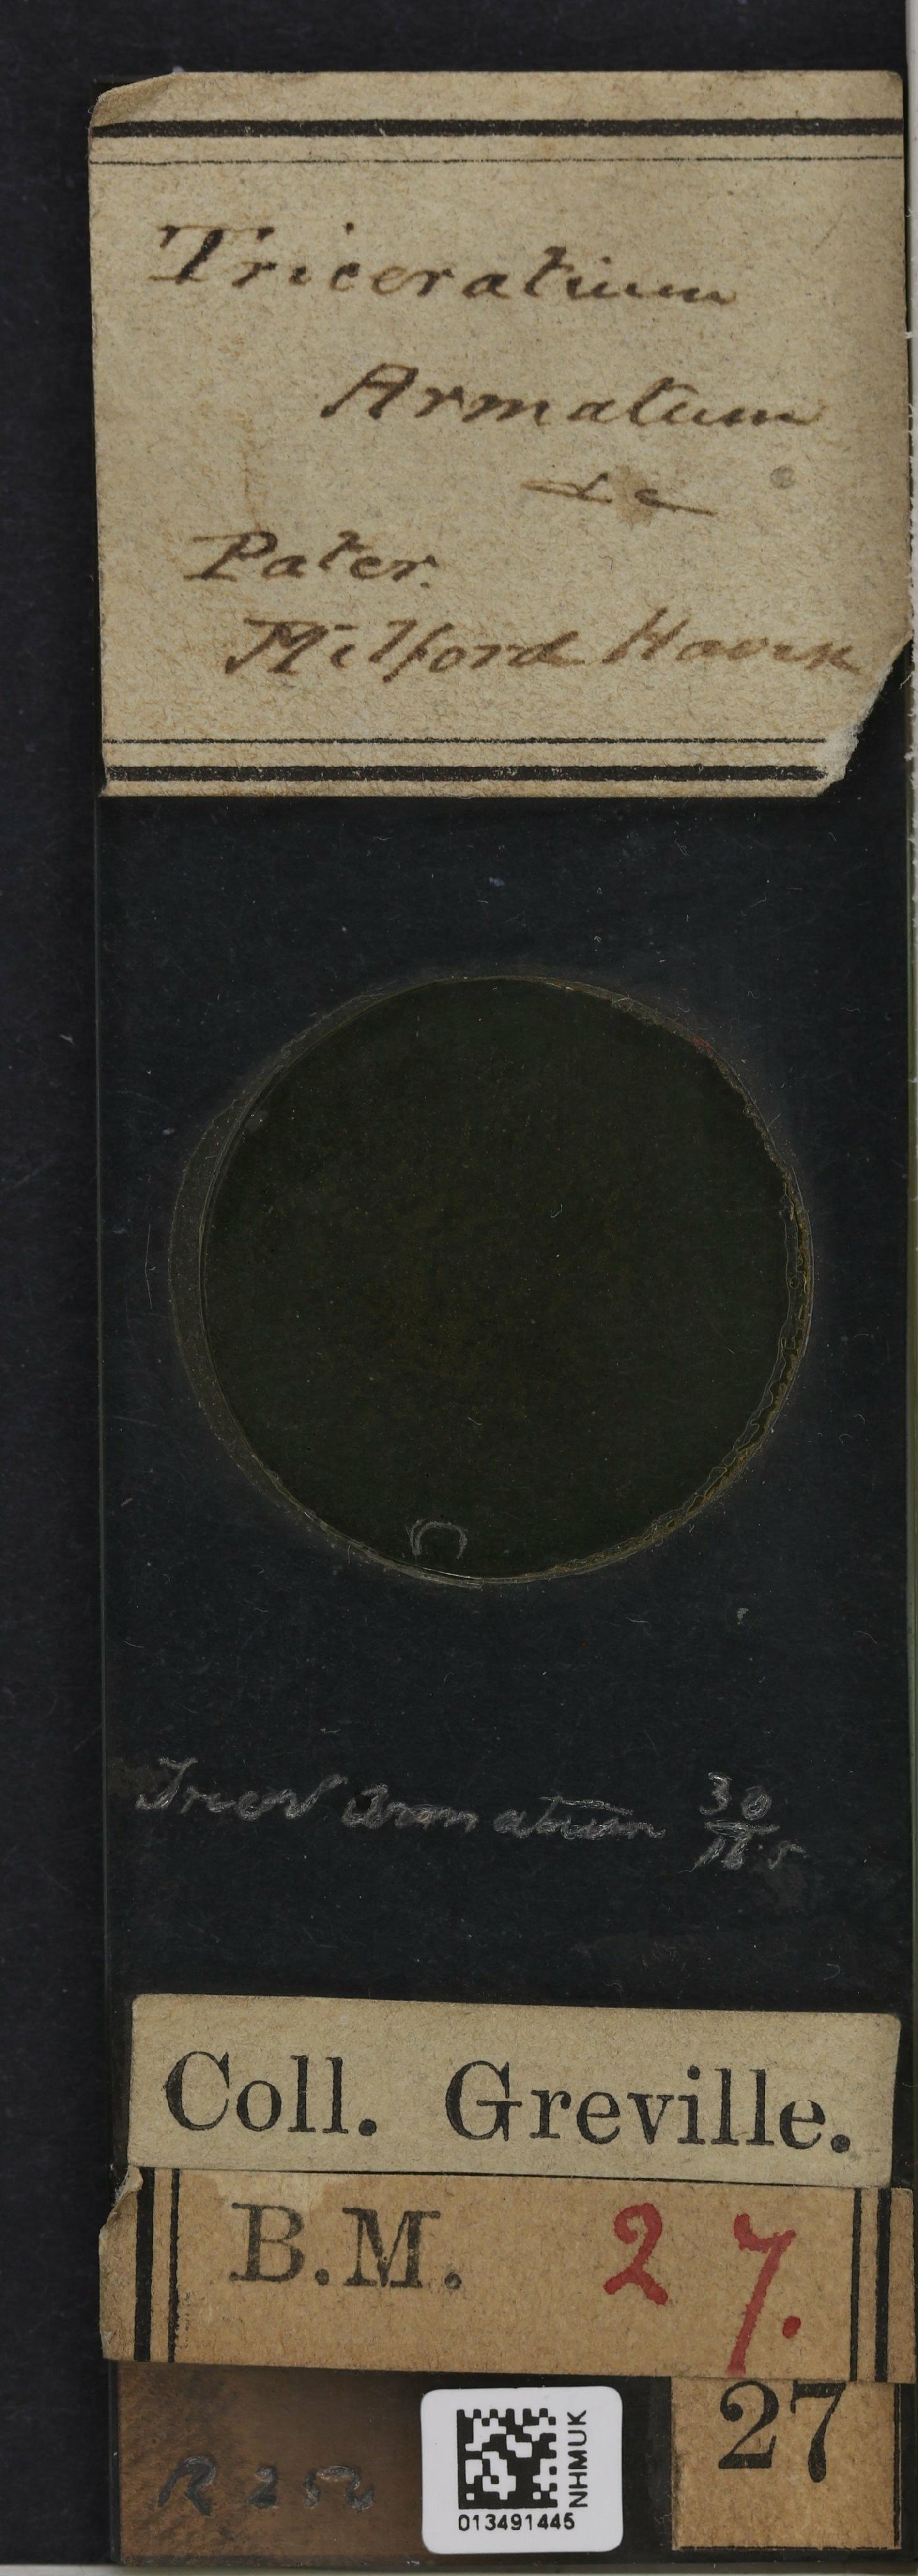 To NHMUK collection (Triceratium armatum Roper; TYPE; NHMUK:ecatalogue:4728389)